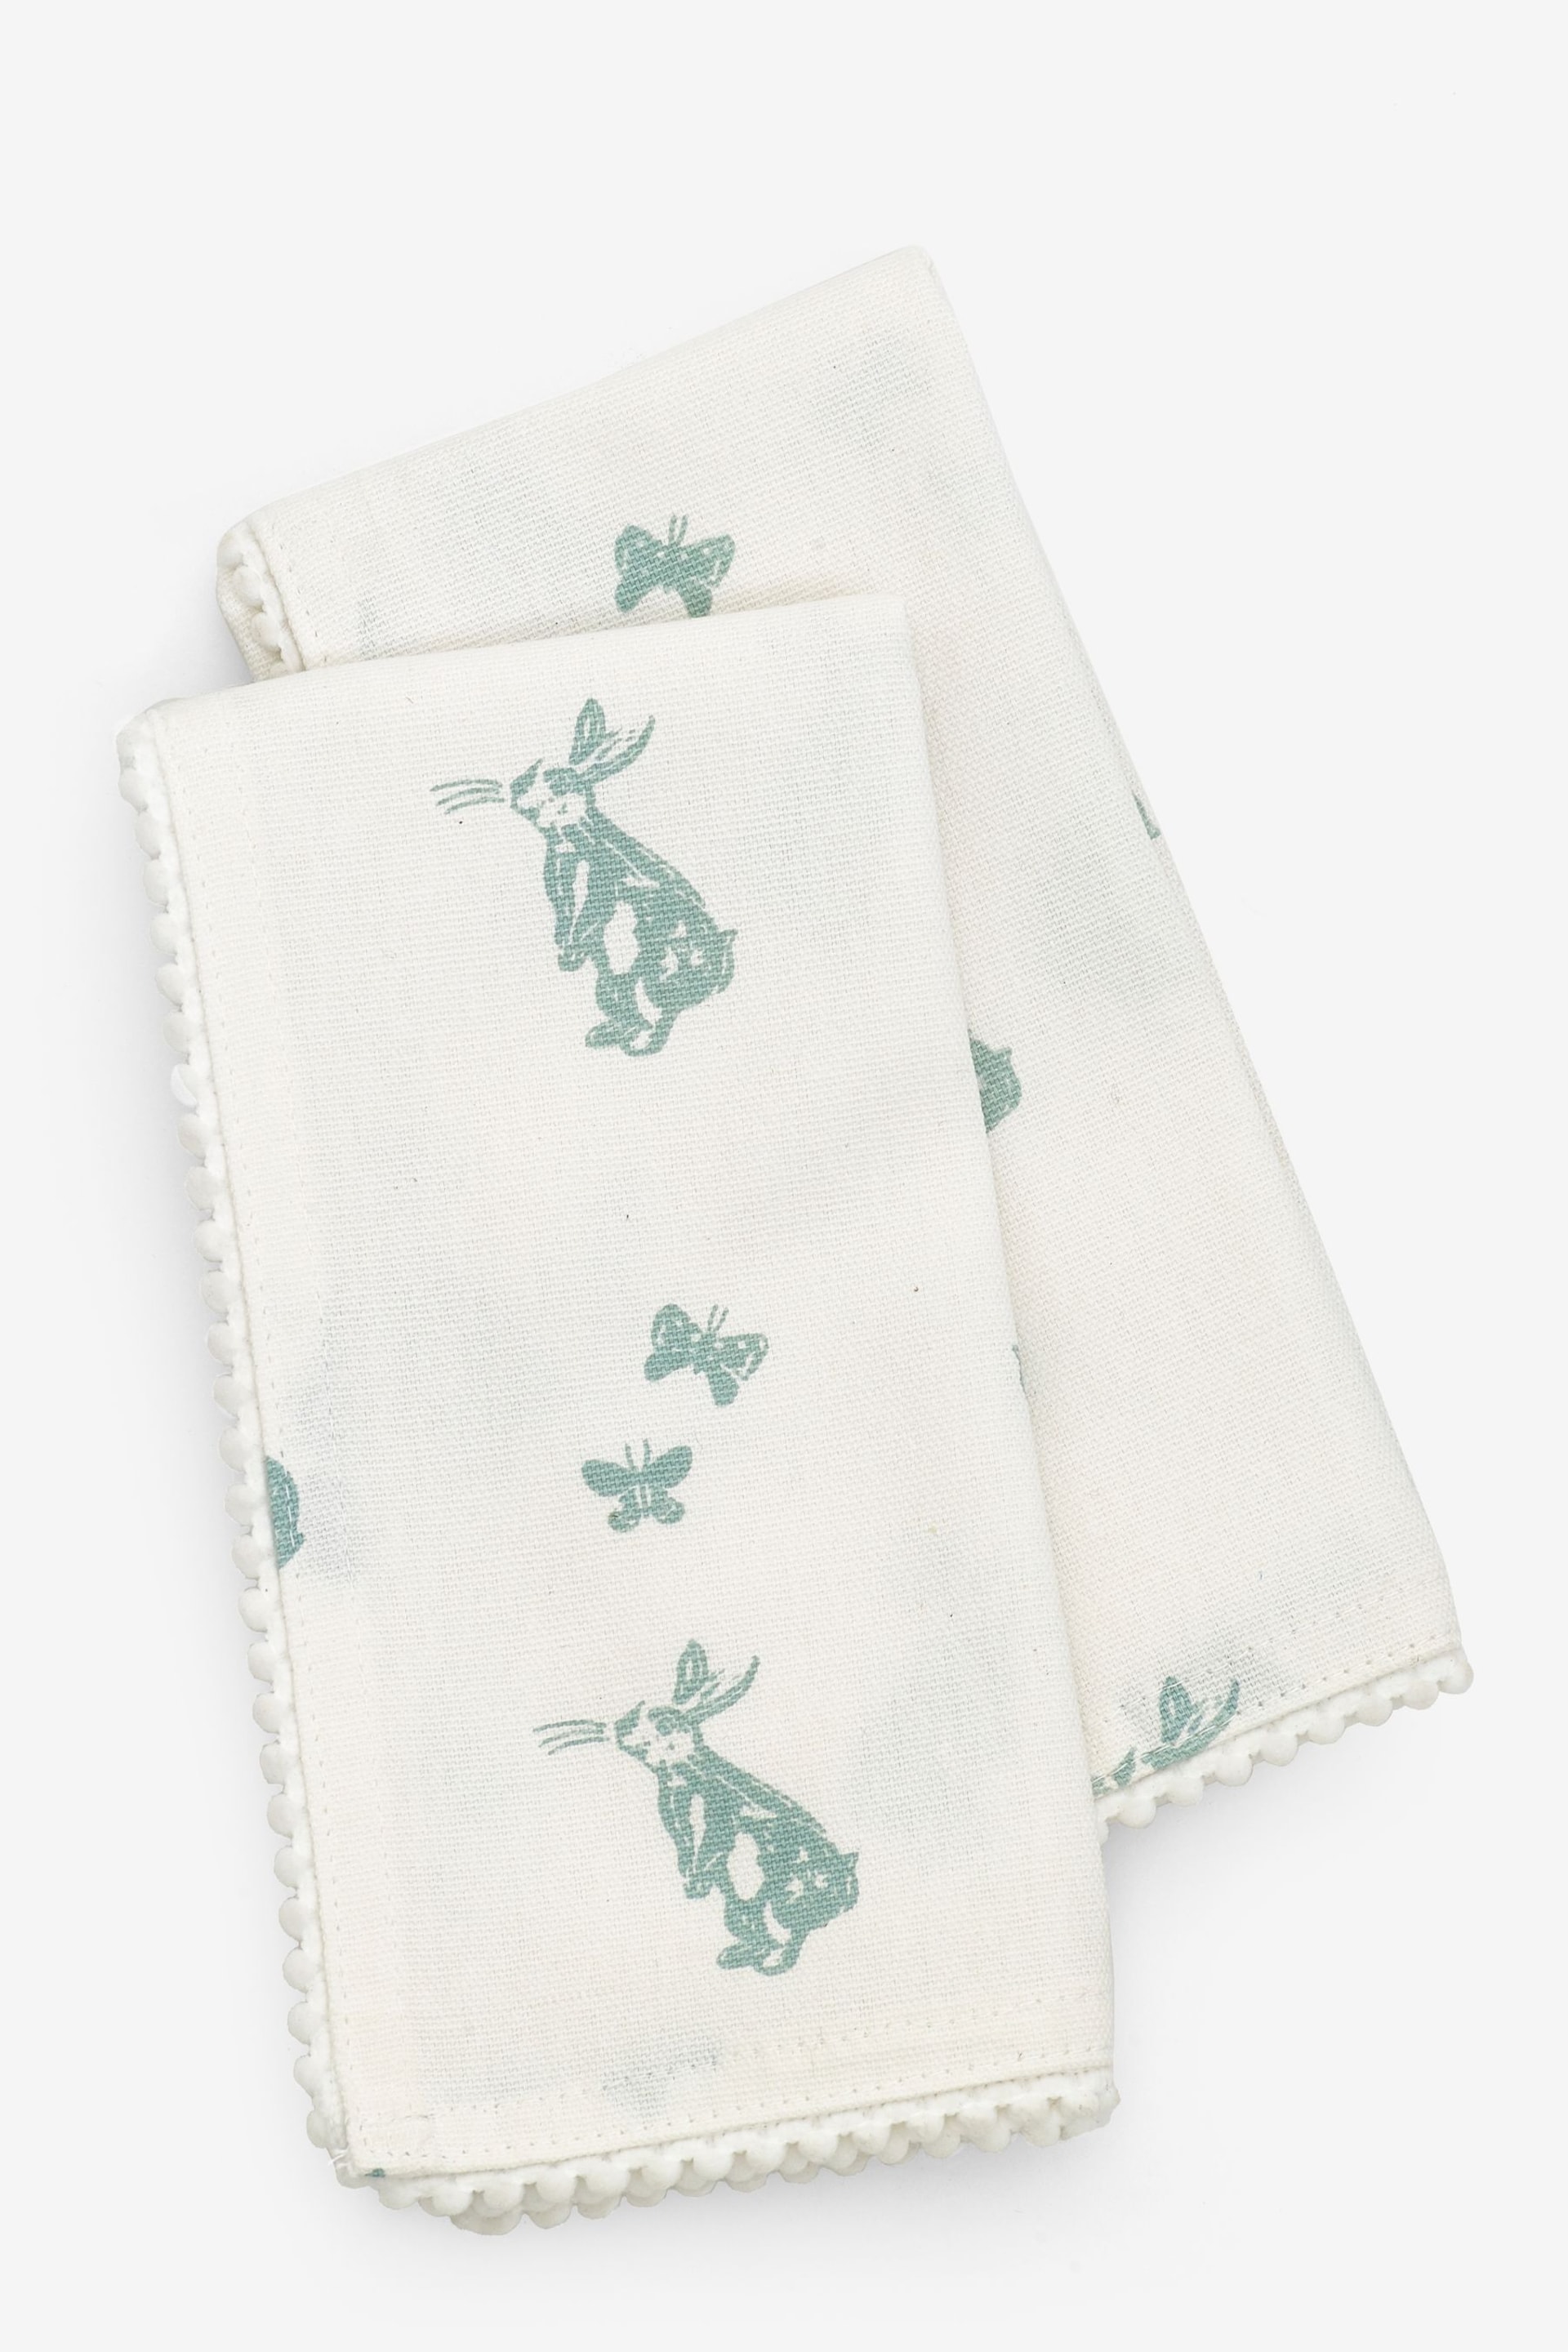 Set of 4 Teal Blue Bunny Rabbit Cotton Pom Napkins - Image 3 of 4